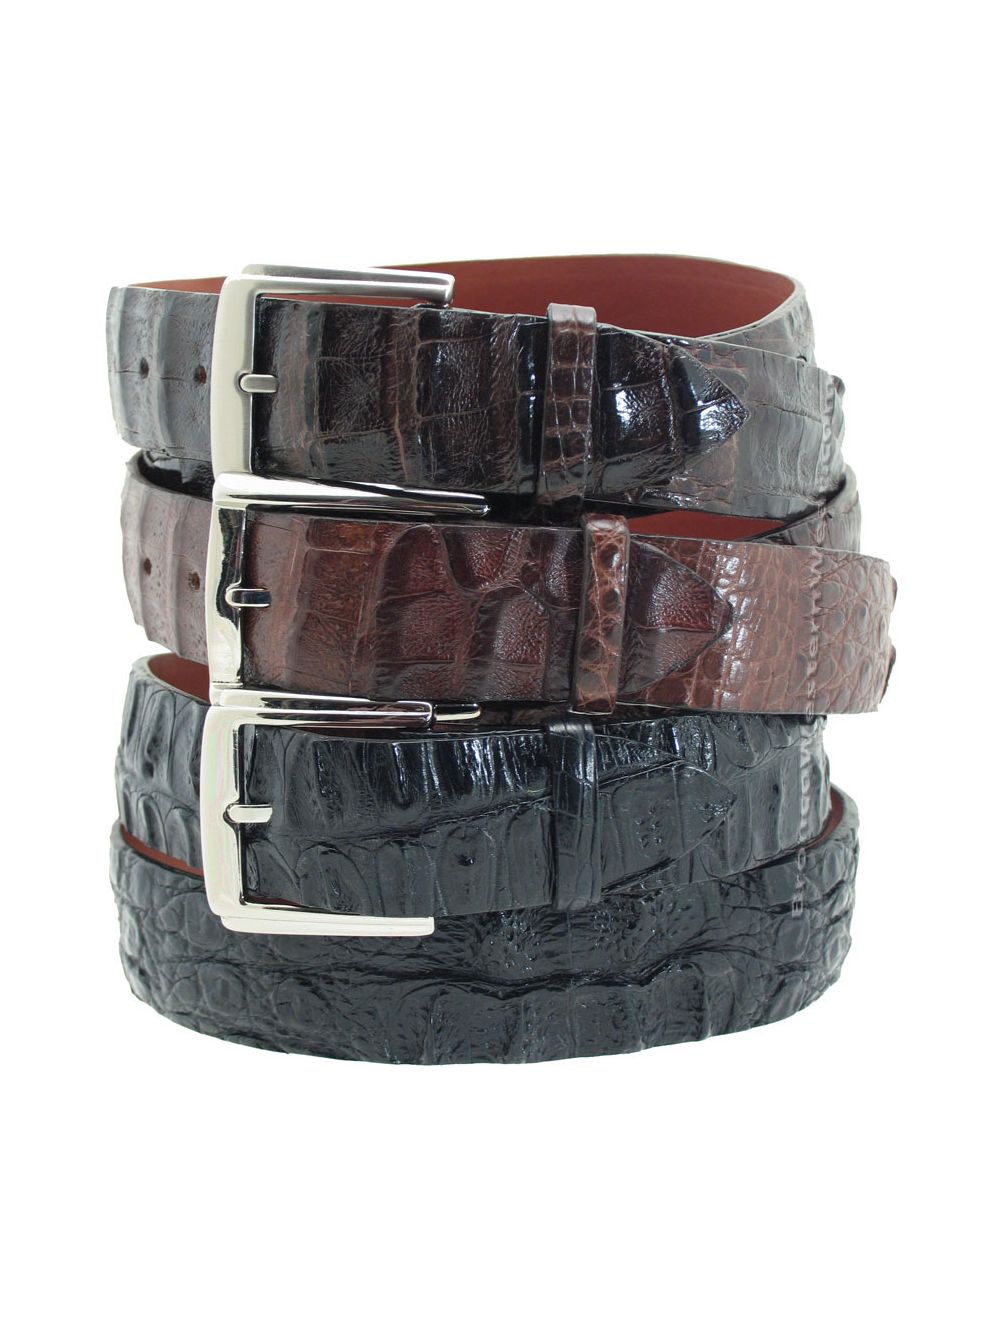 Brown leather bracelet, double watch closure, adjustable length